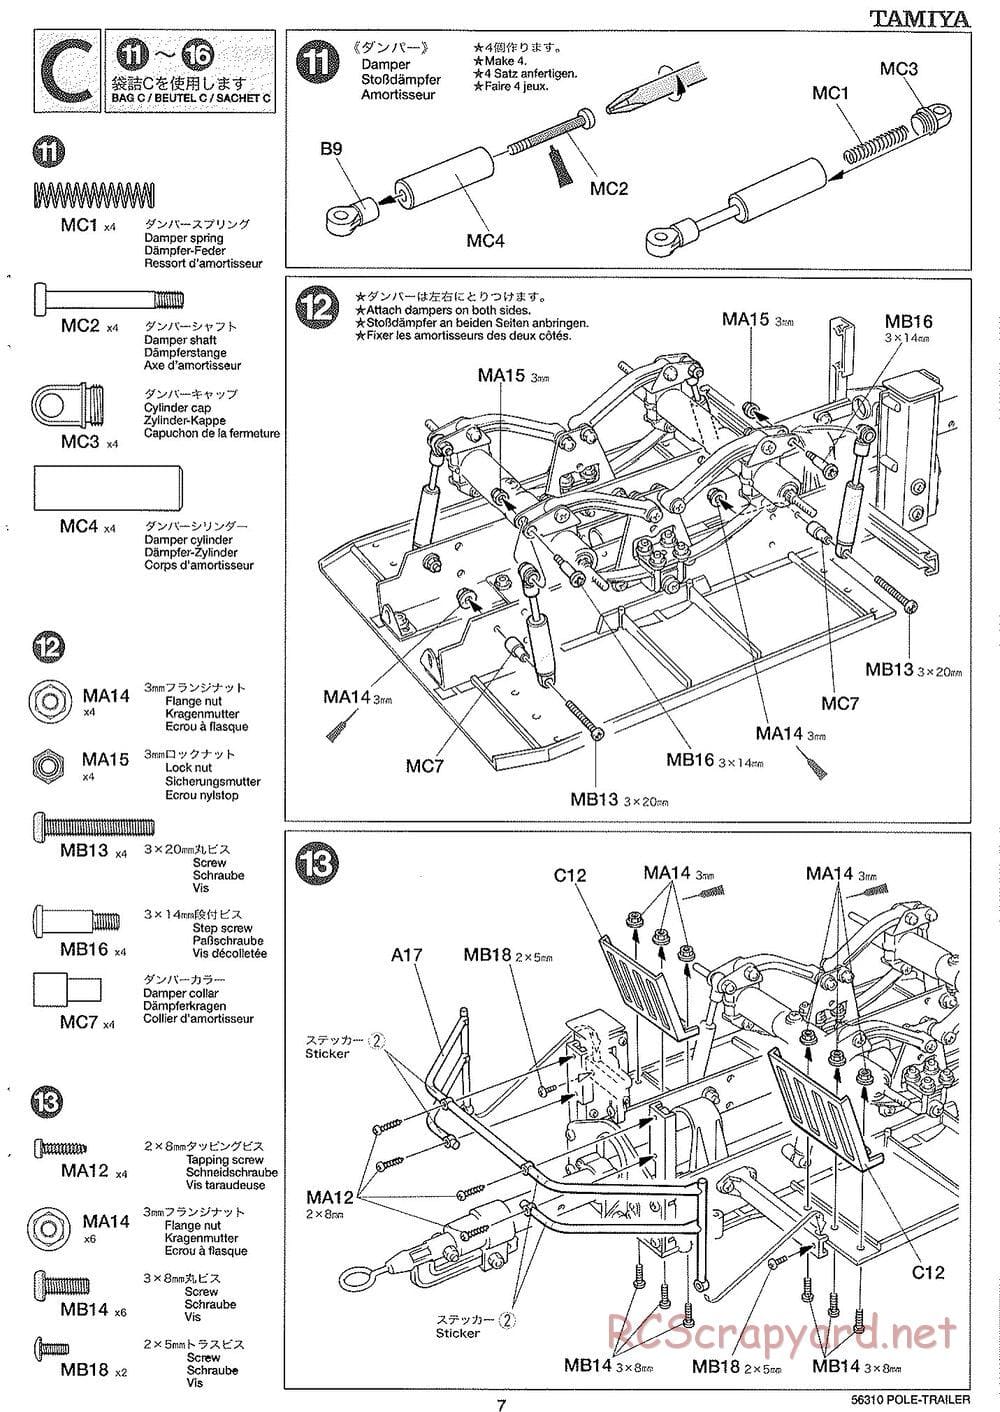 Tamiya - Semi Pole Trailer Chassis - Manual - Page 7